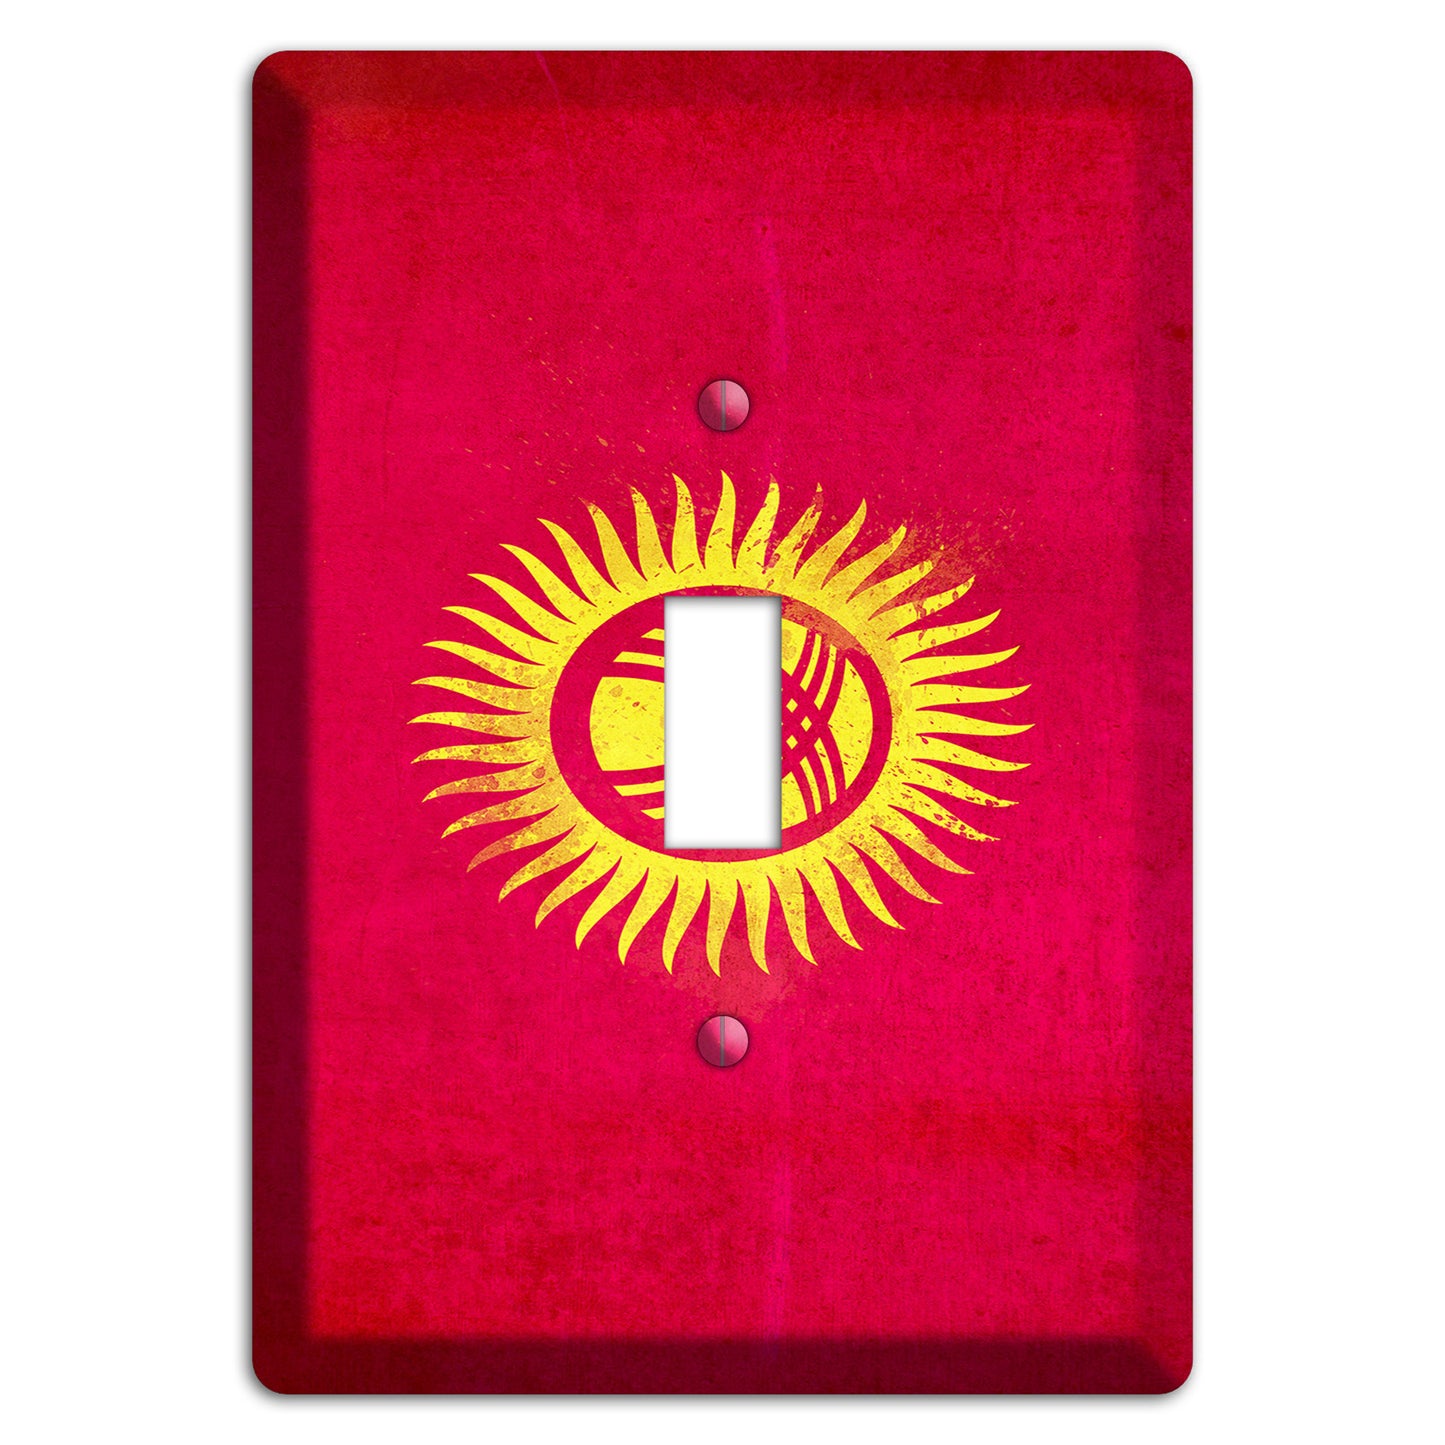 Kyrgyzstan Cover Plates Cover Plates